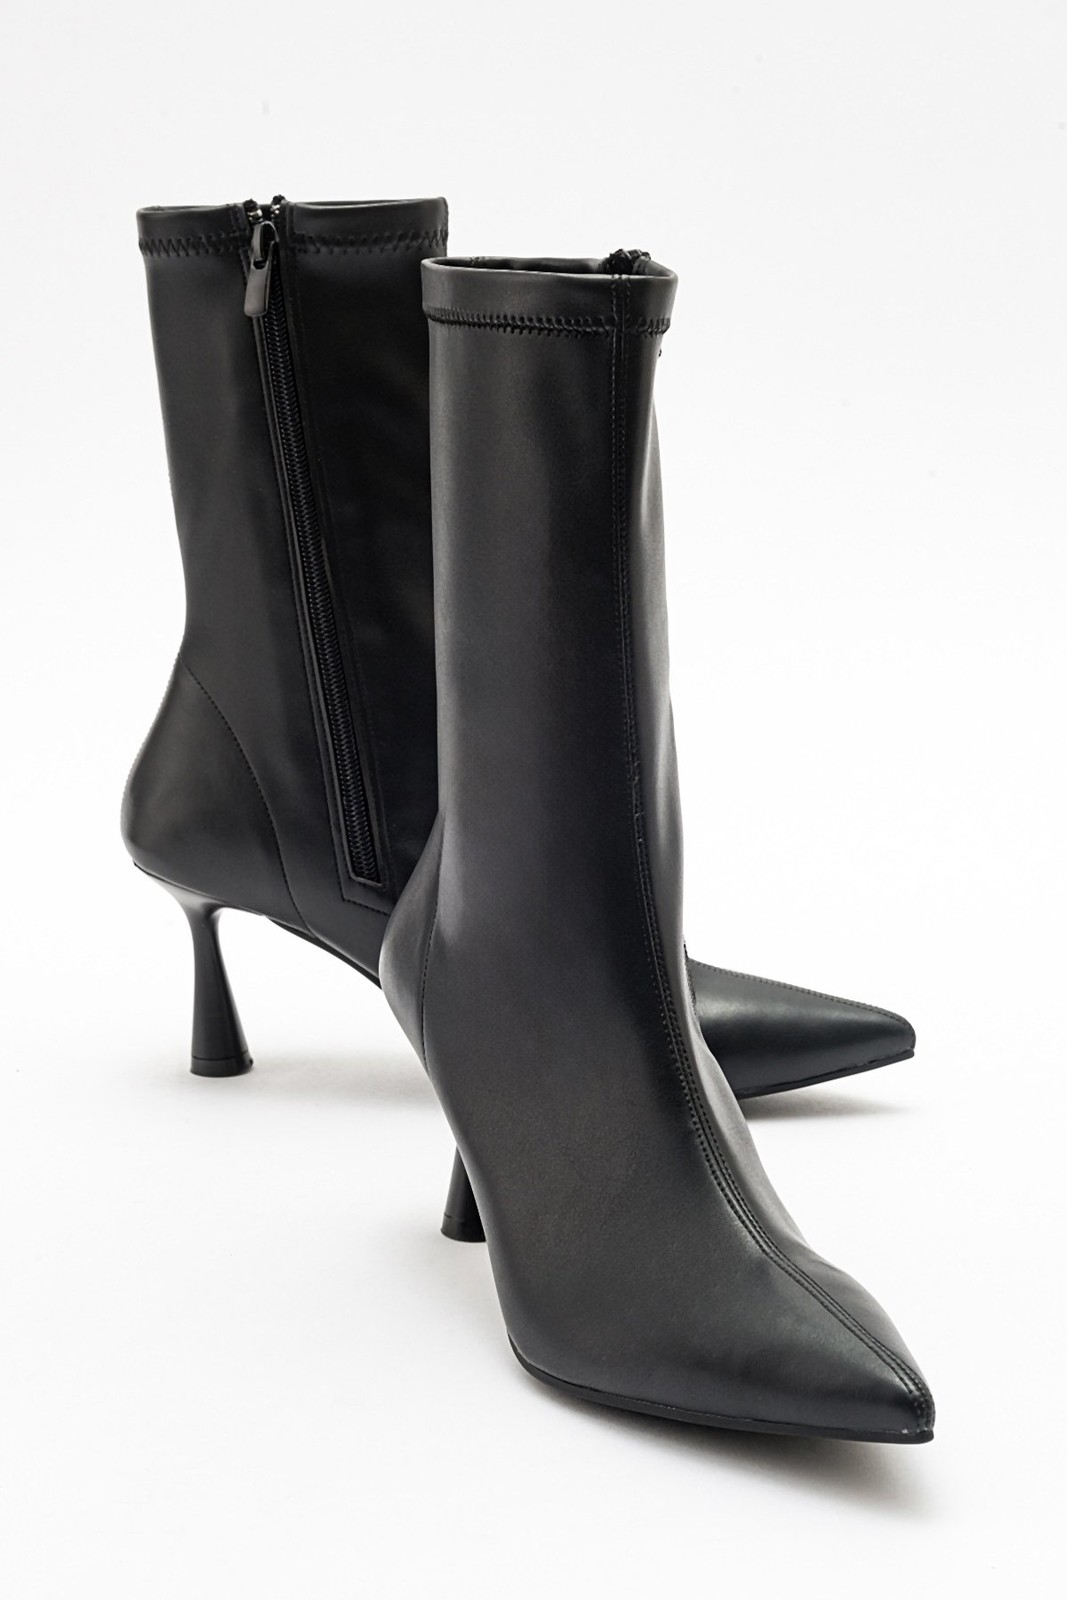 LuviShoes SPEZIA Women's Black Stretch Heel Boots